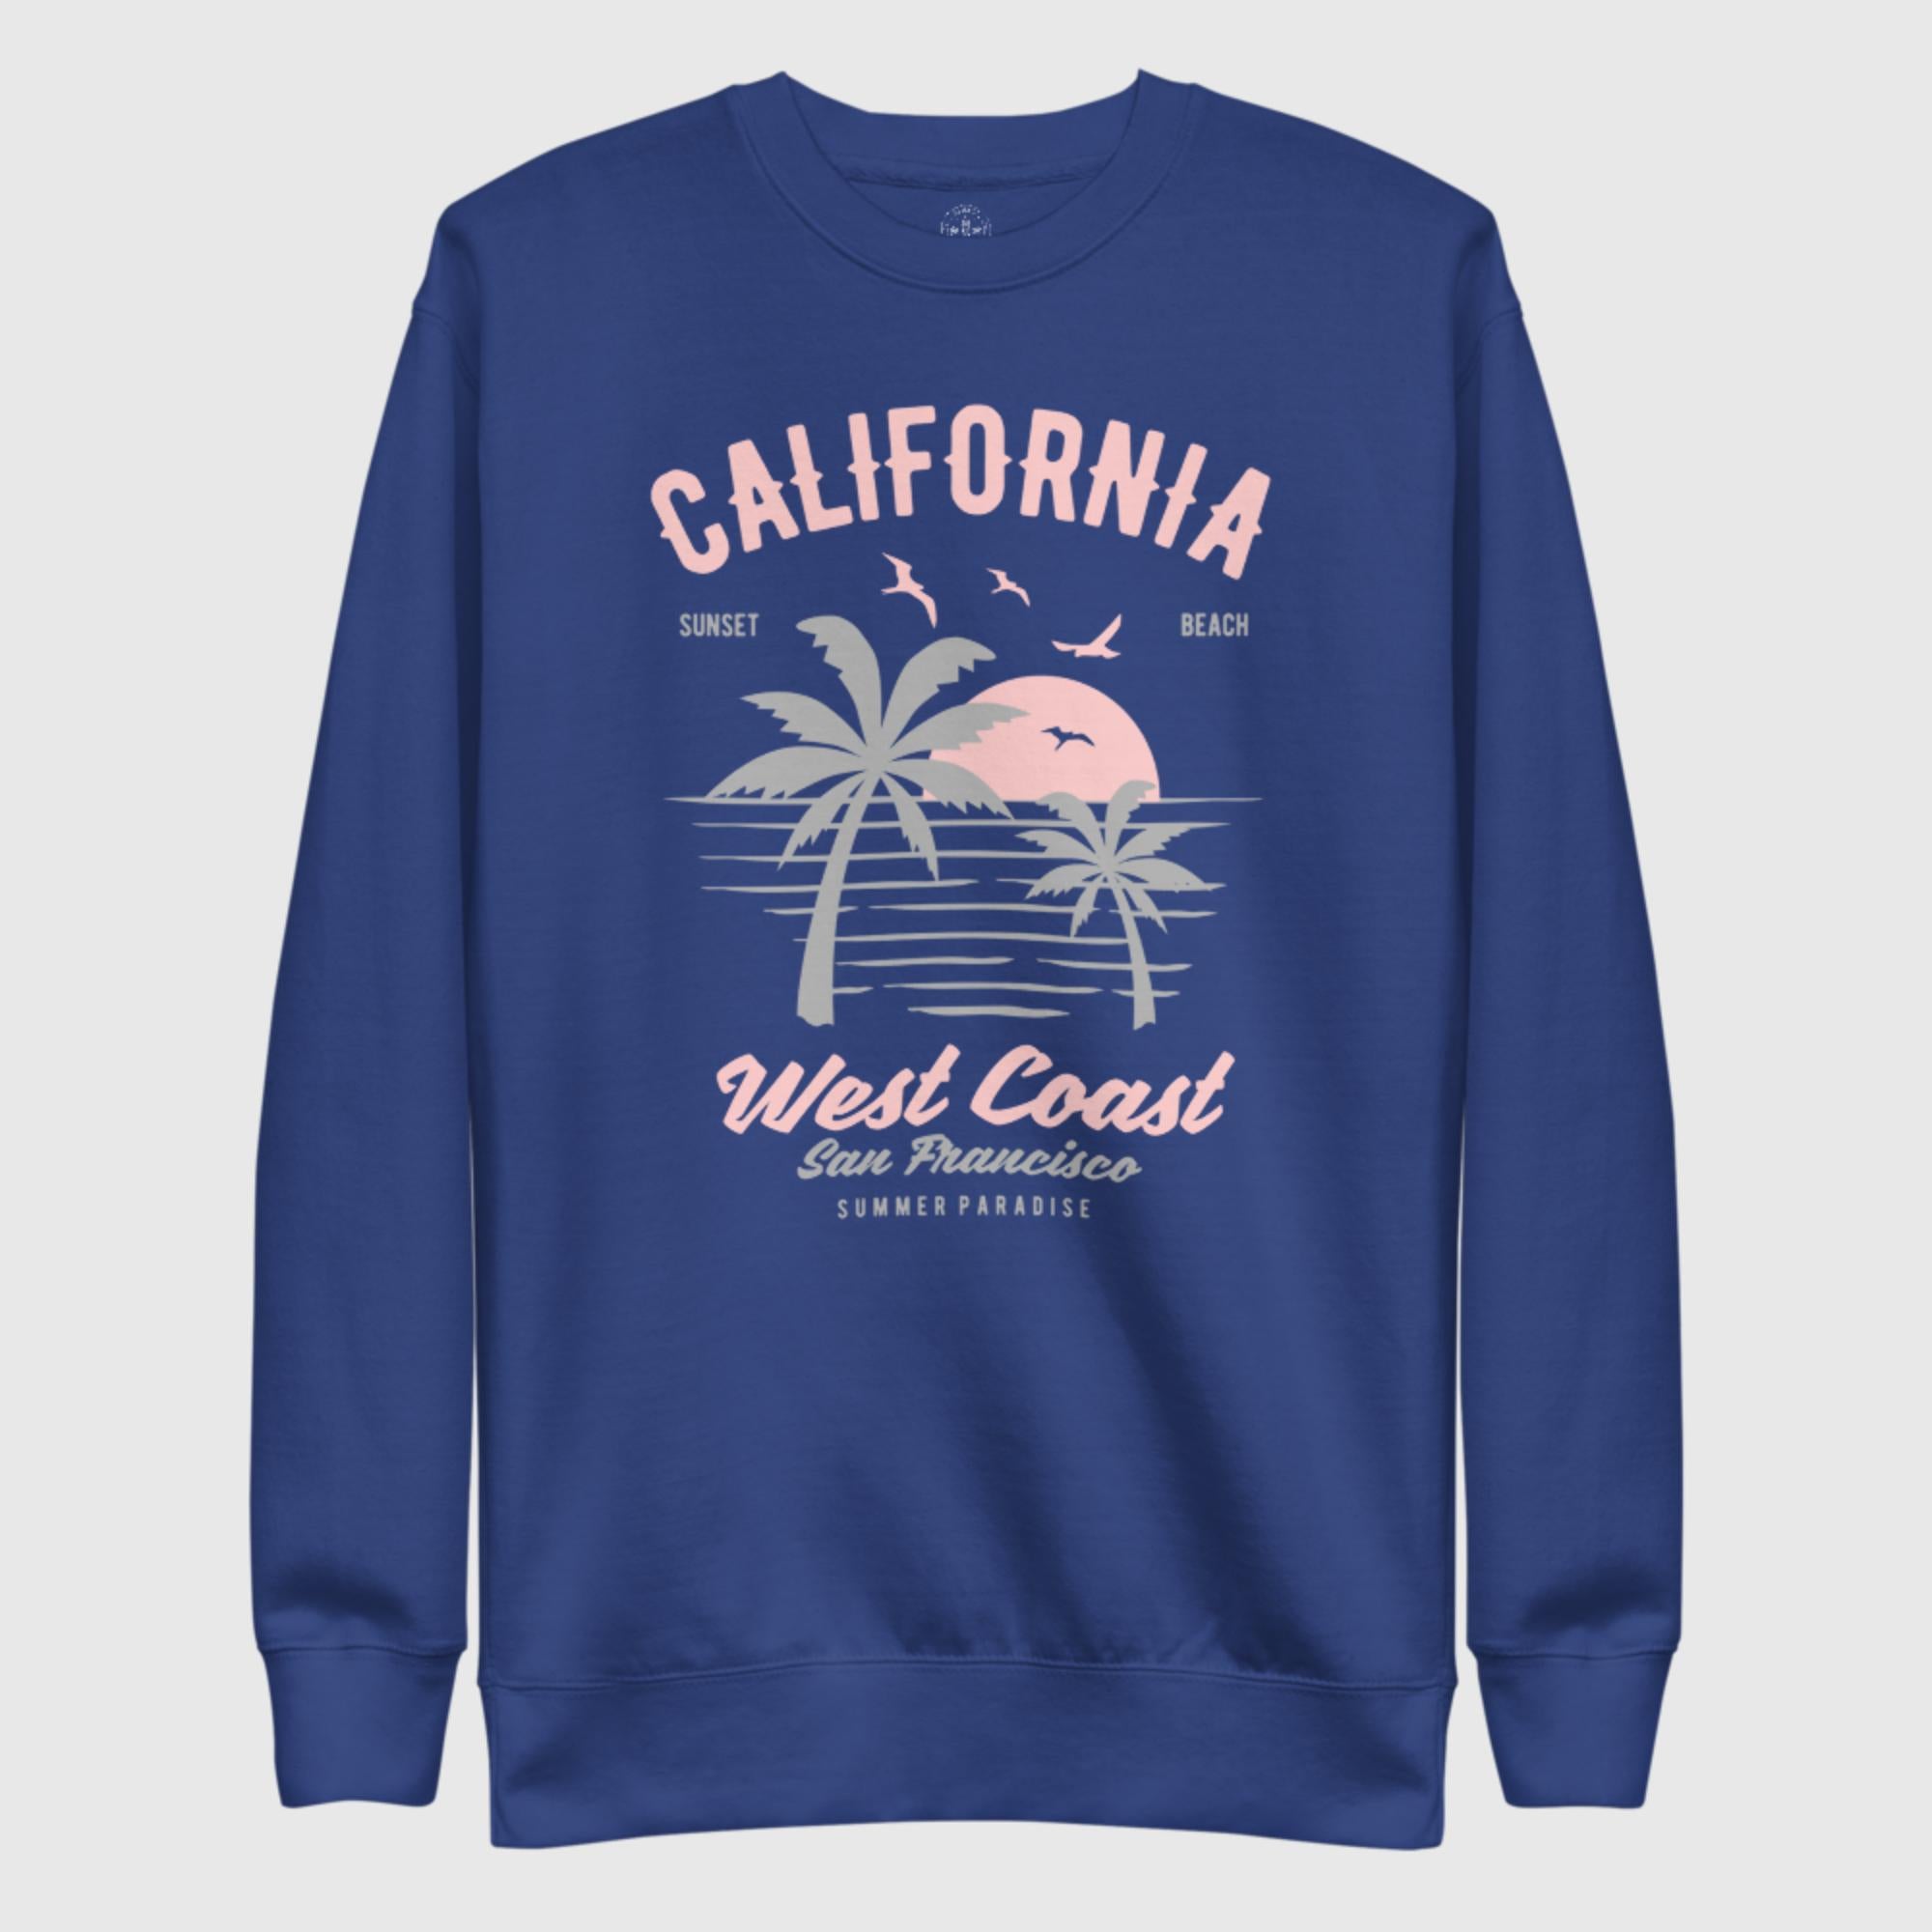 Unisex Premium Sweatshirt - California West Coast - Sunset Harbor Clothing